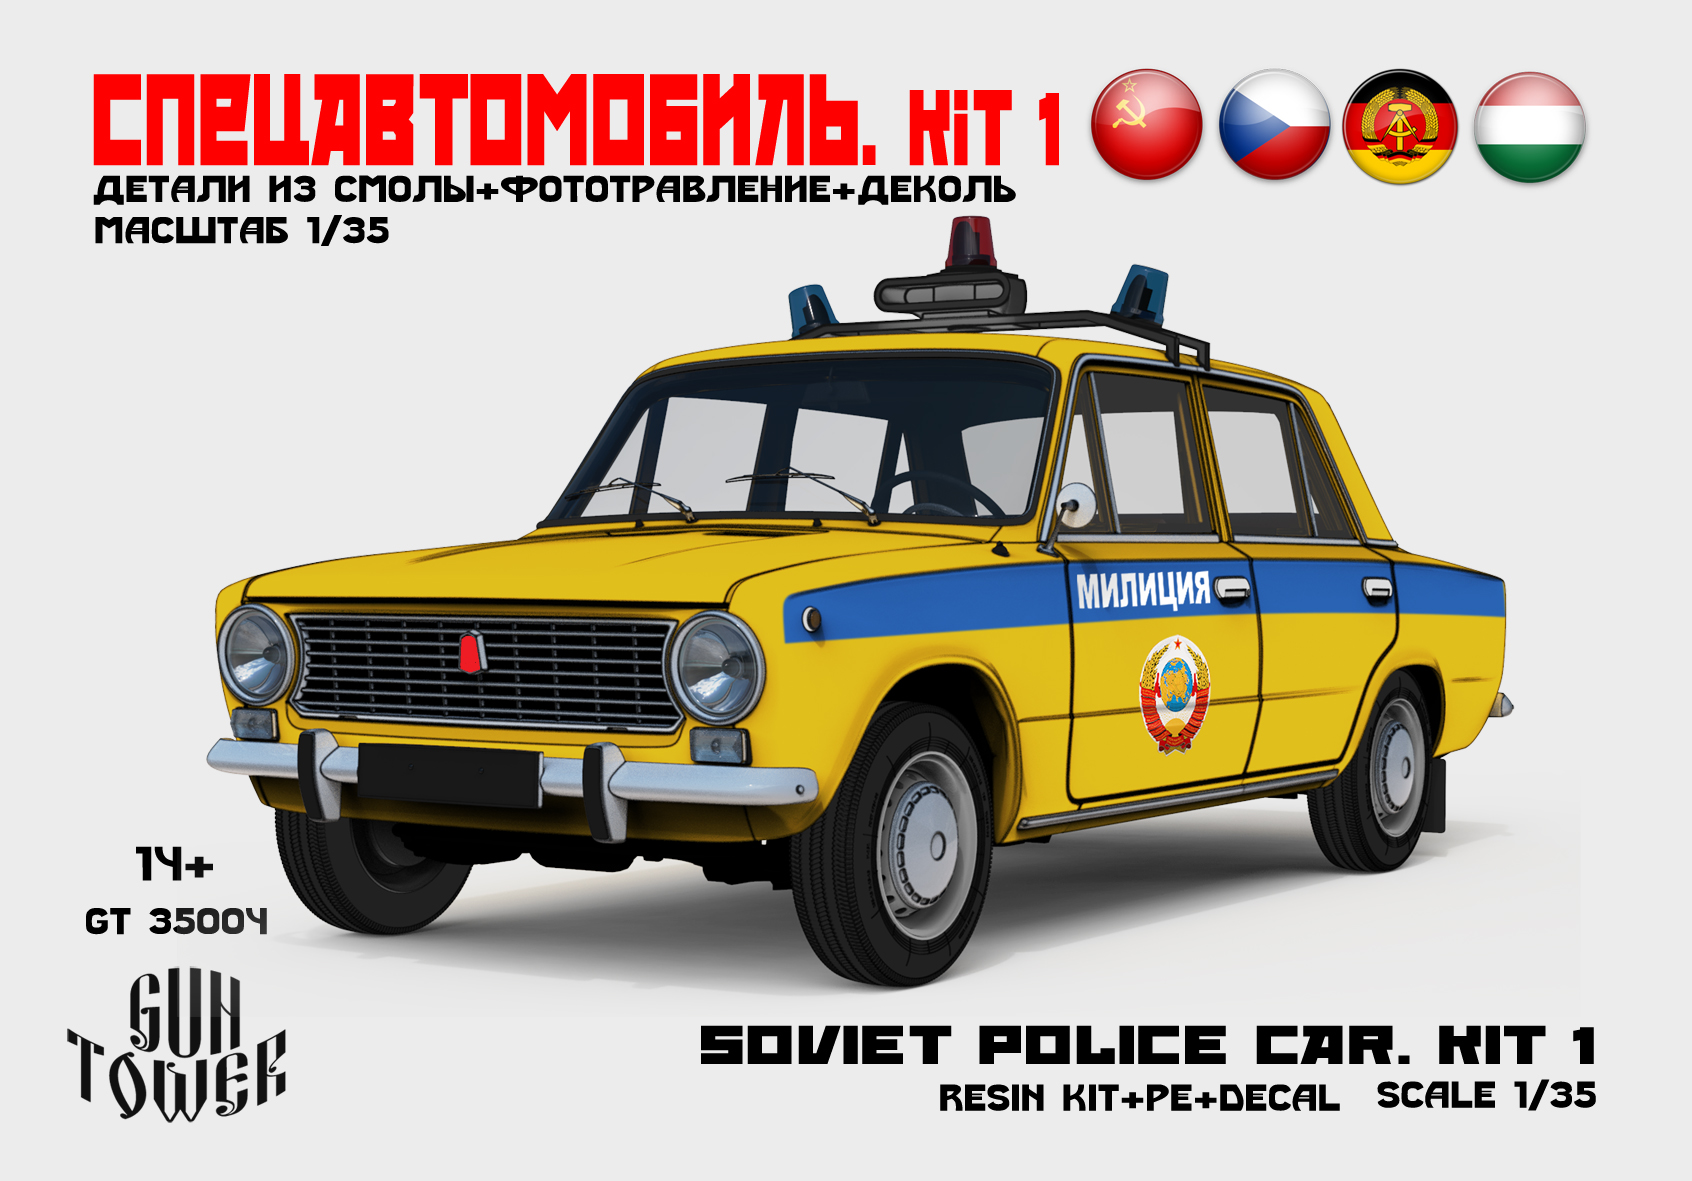 Soviet police car.Kit 1 (2101)